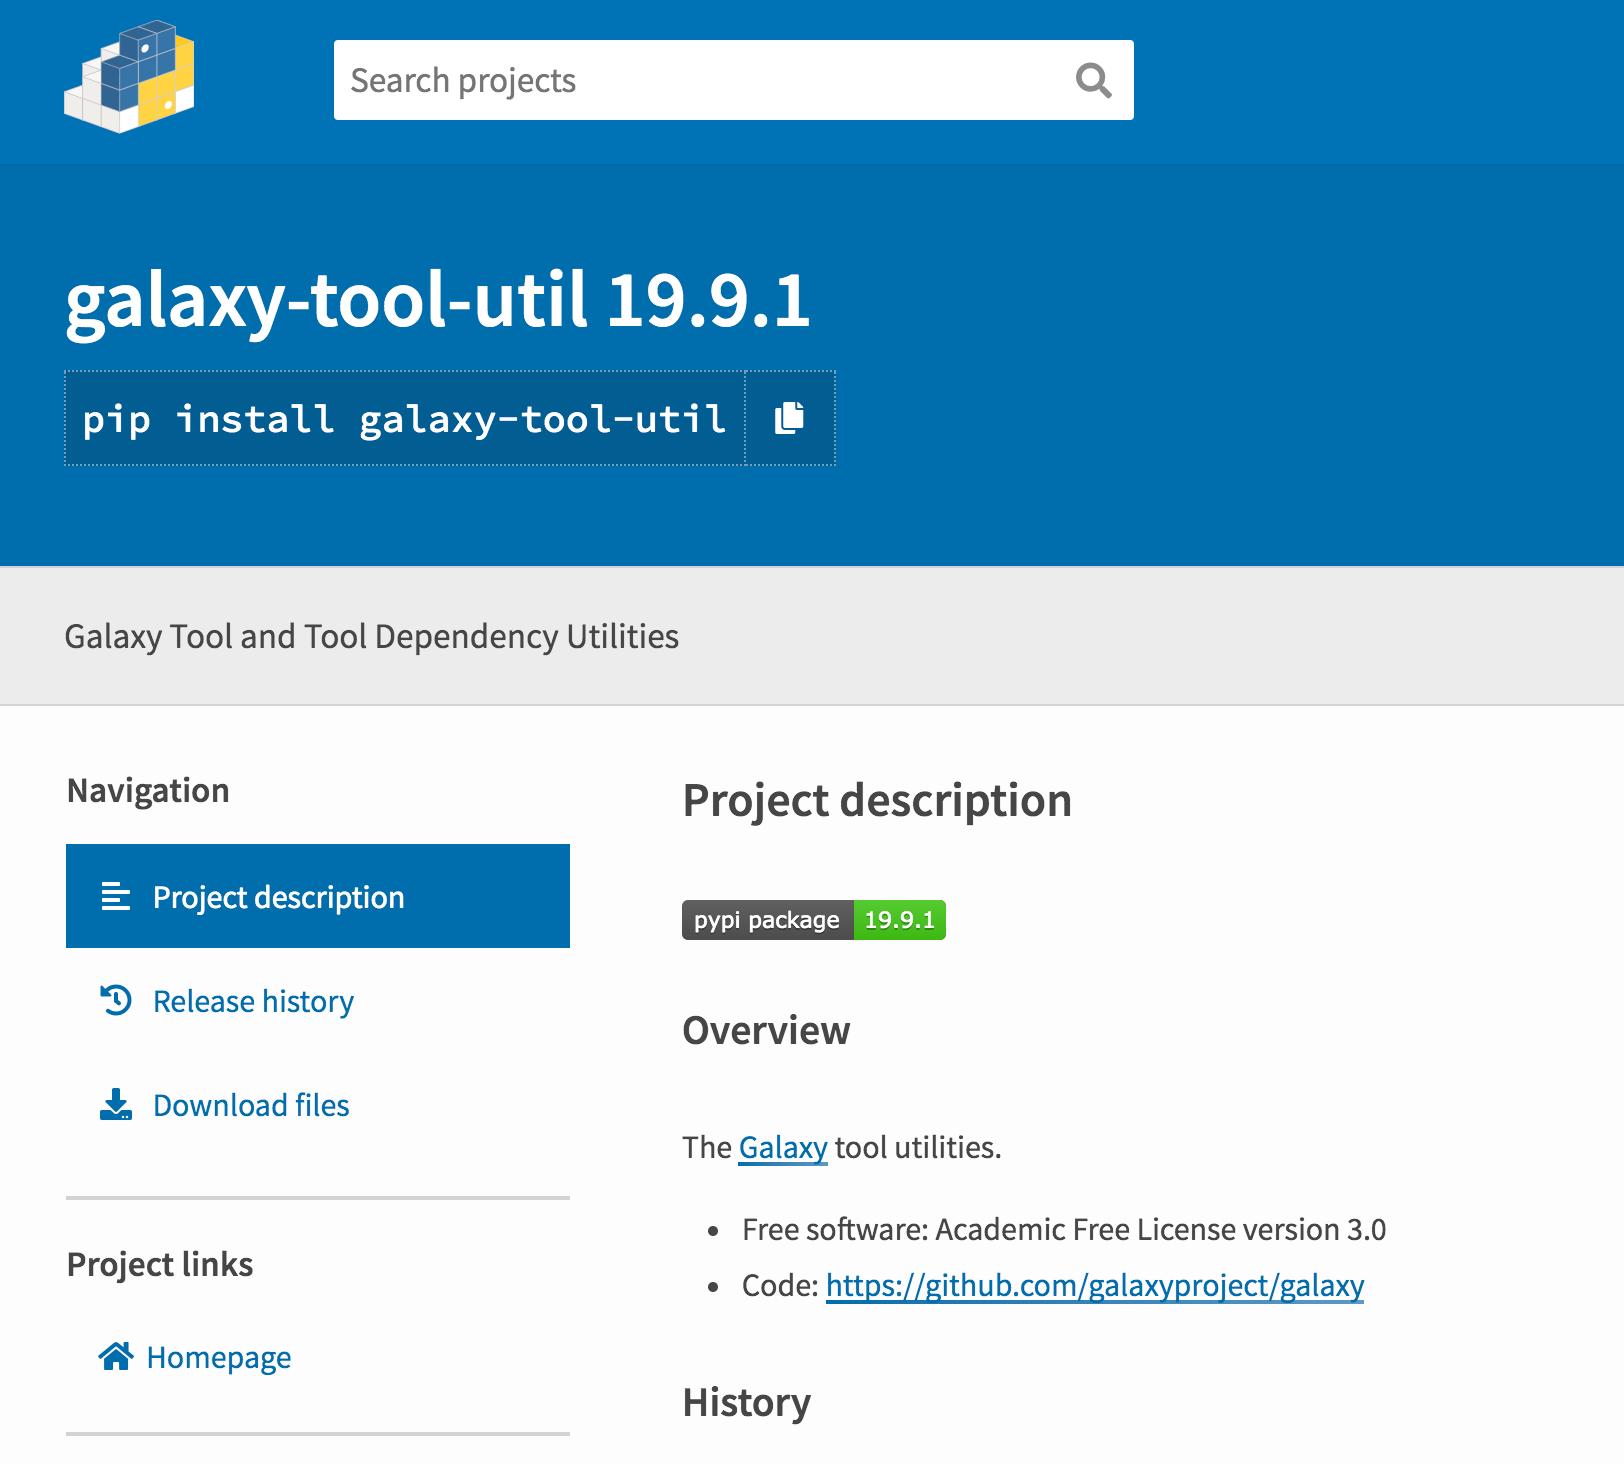 galaxy-tool-util on PyPI